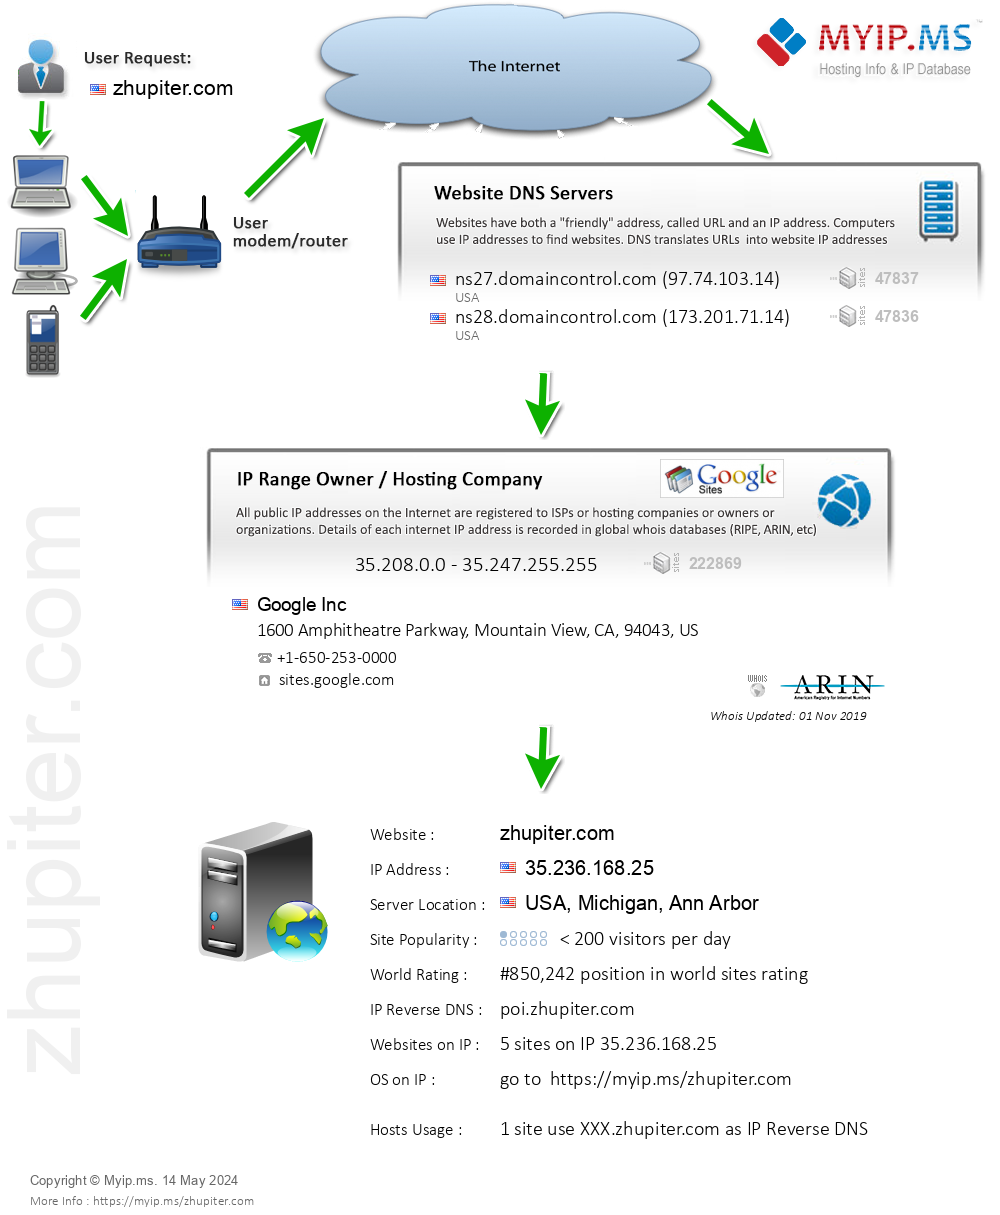 Zhupiter.com - Website Hosting Visual IP Diagram